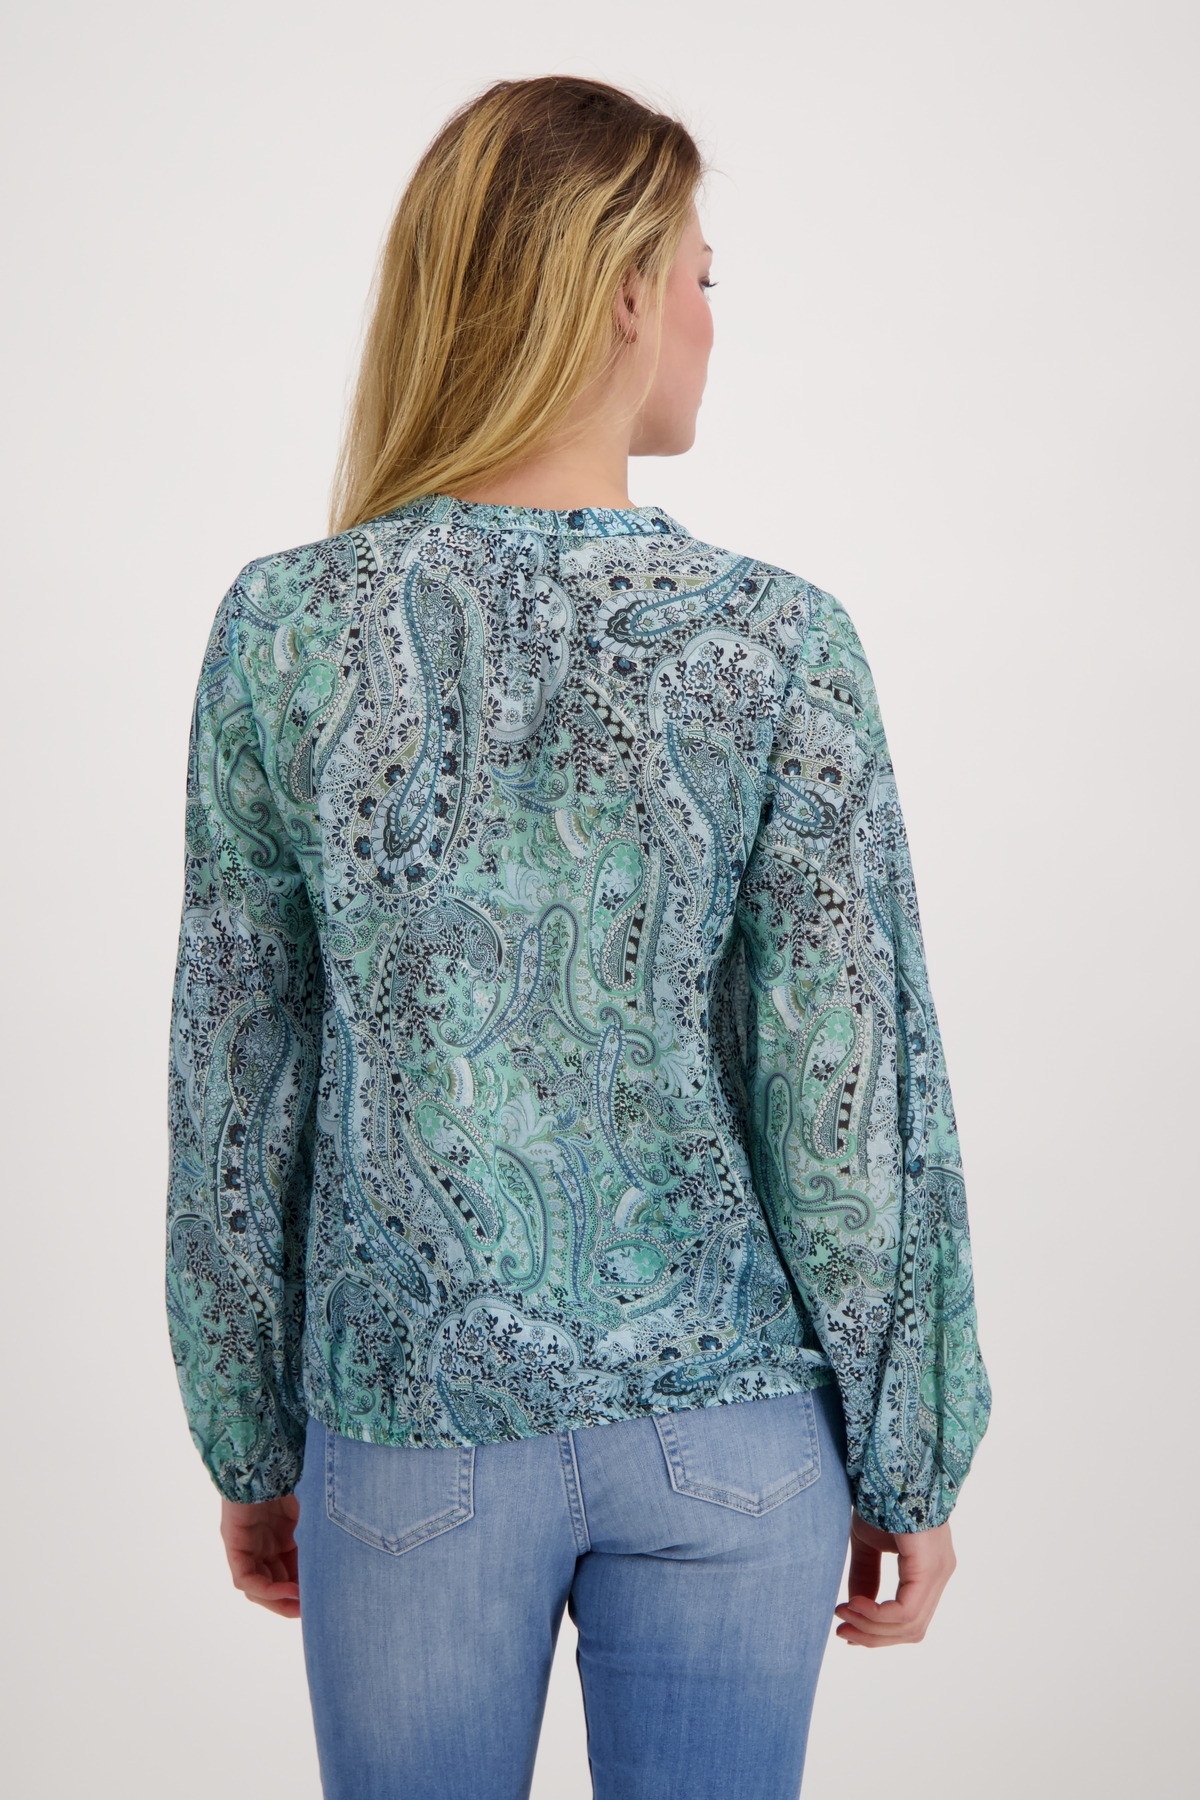 Monari Paisley Muster Bluse mit Gummizug, fresh mint gemustert - Hartmann  Mode Shop